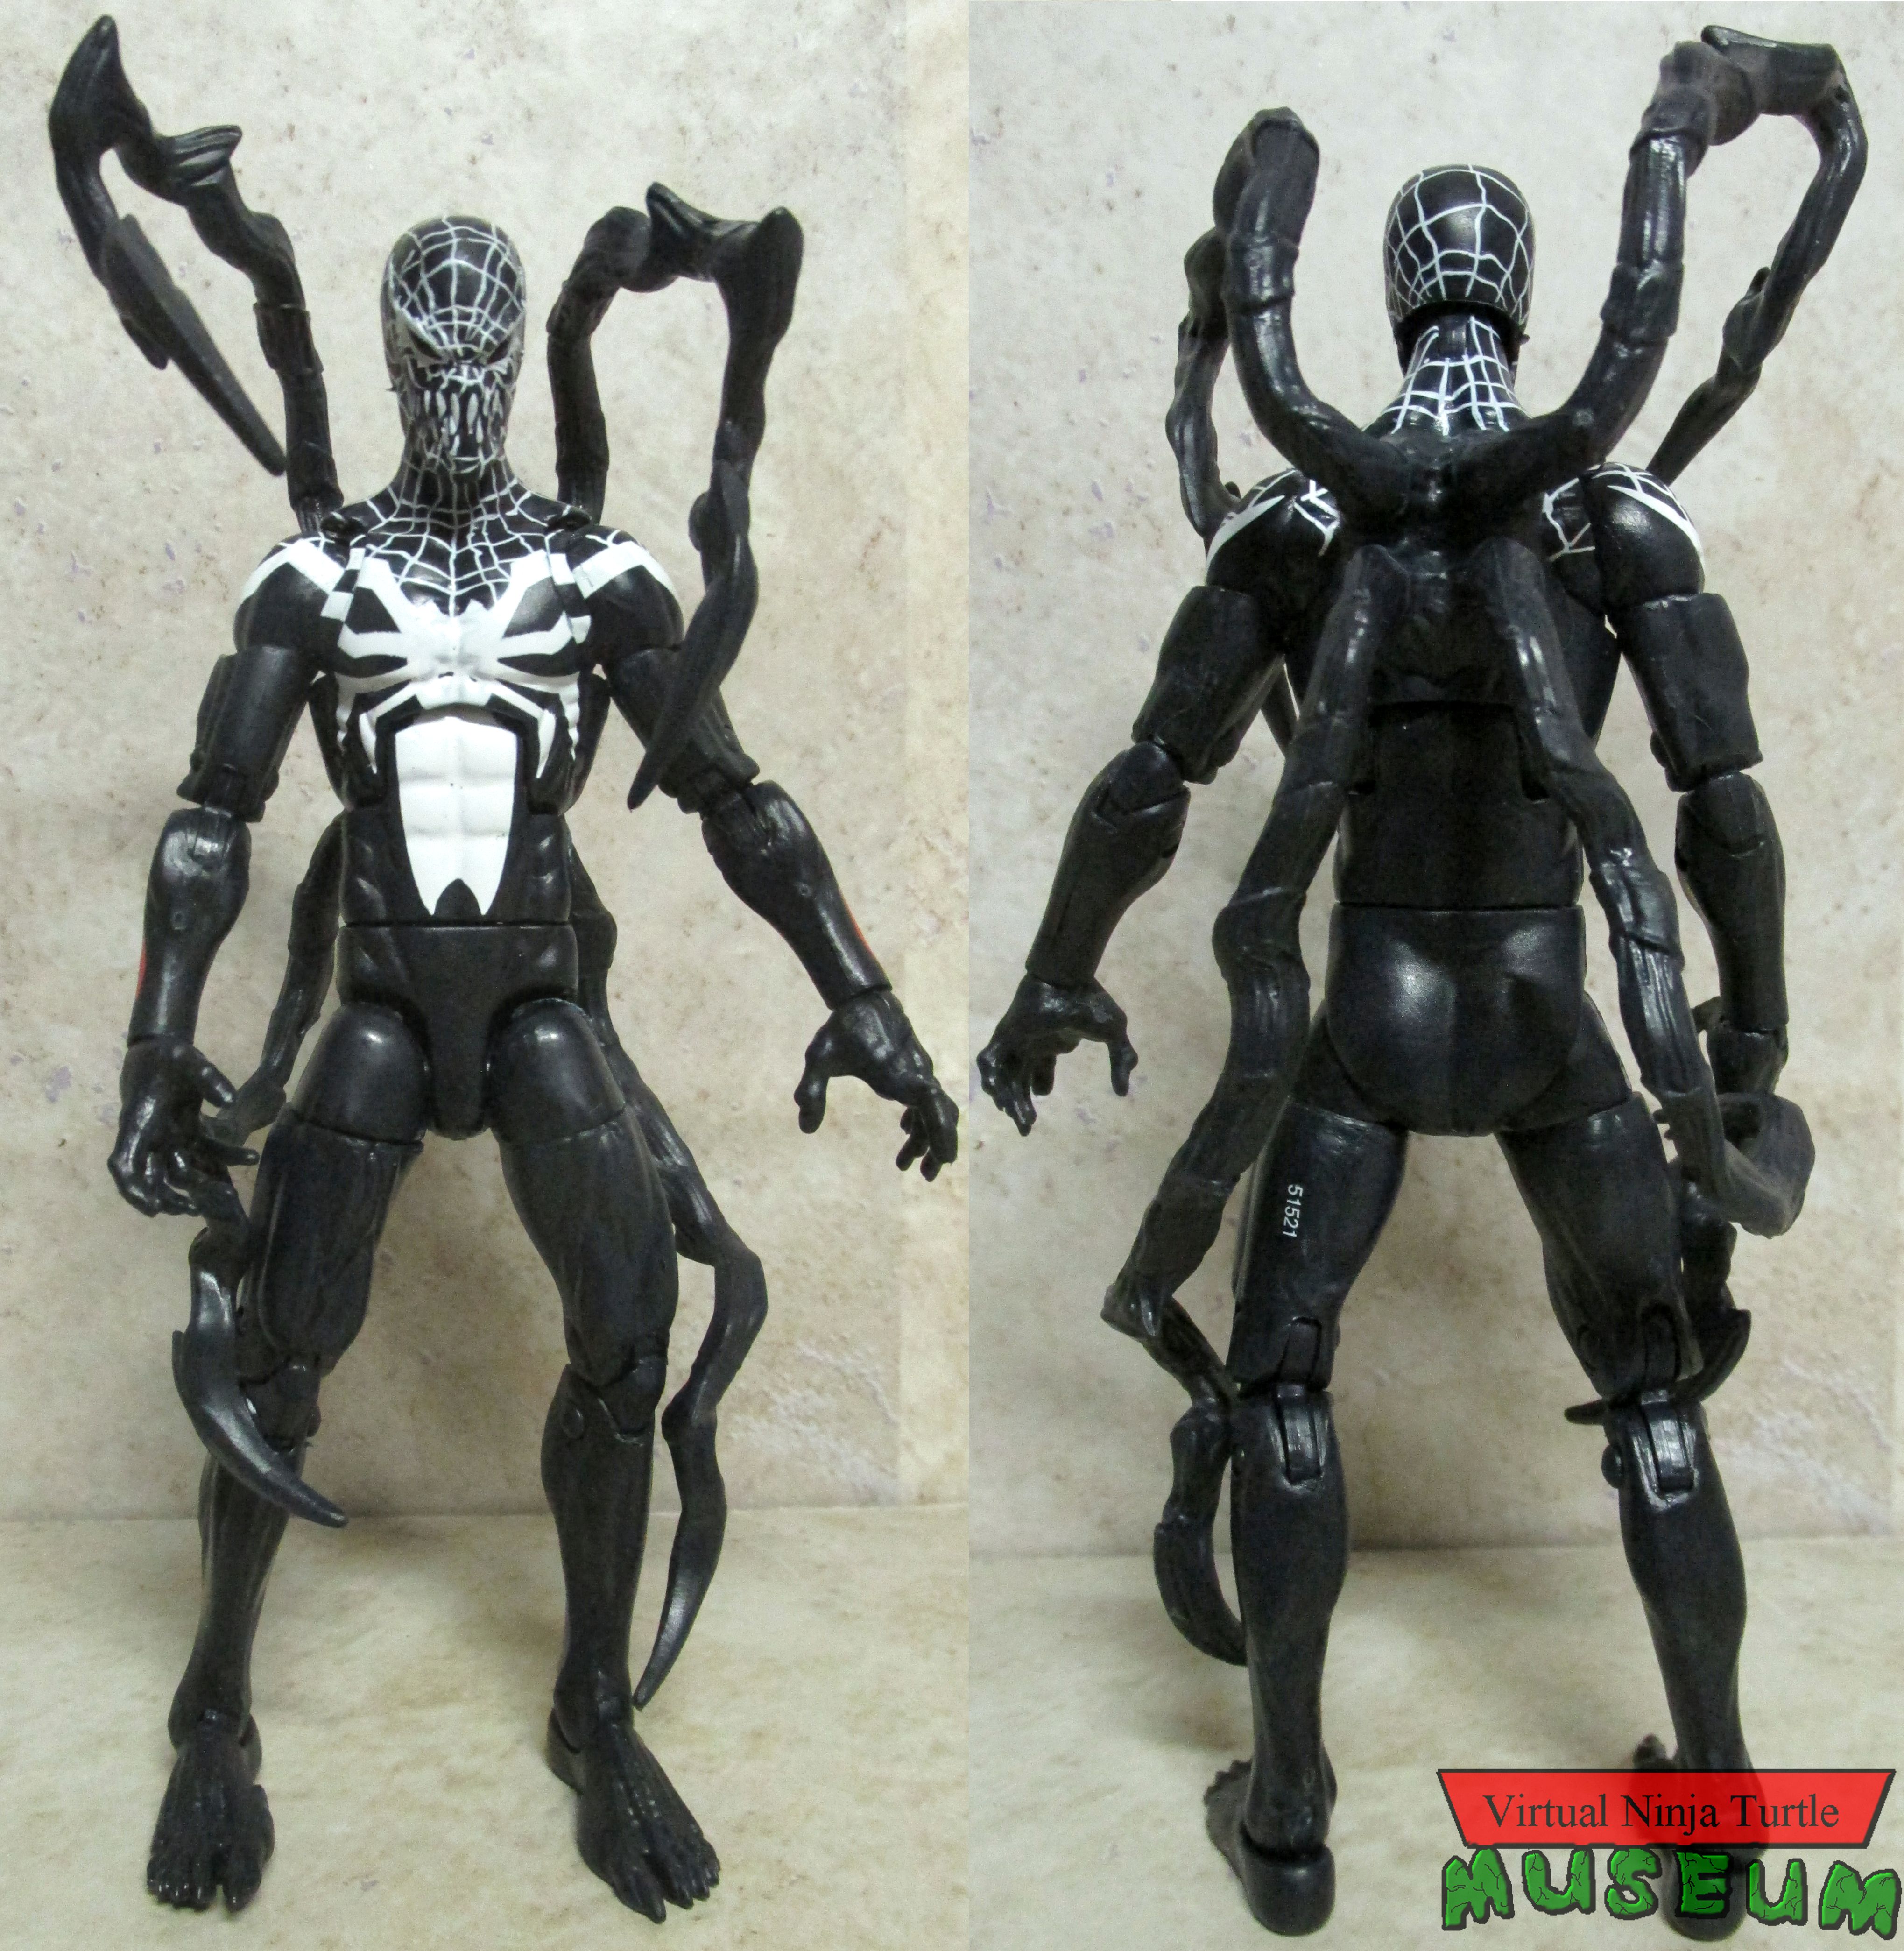 Superior Venom front and back